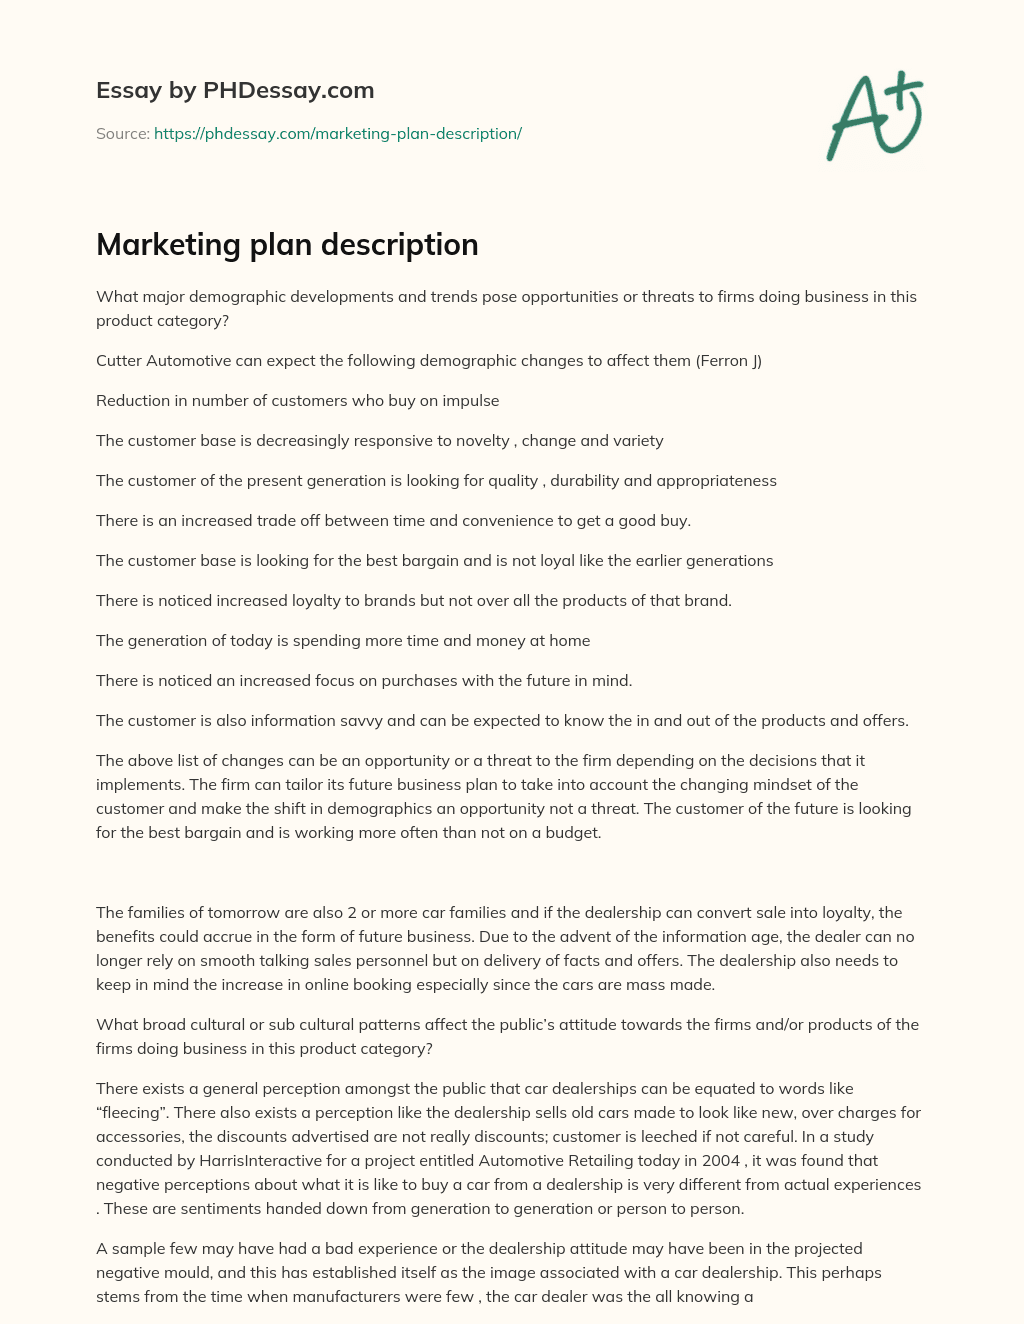 Marketing plan description essay